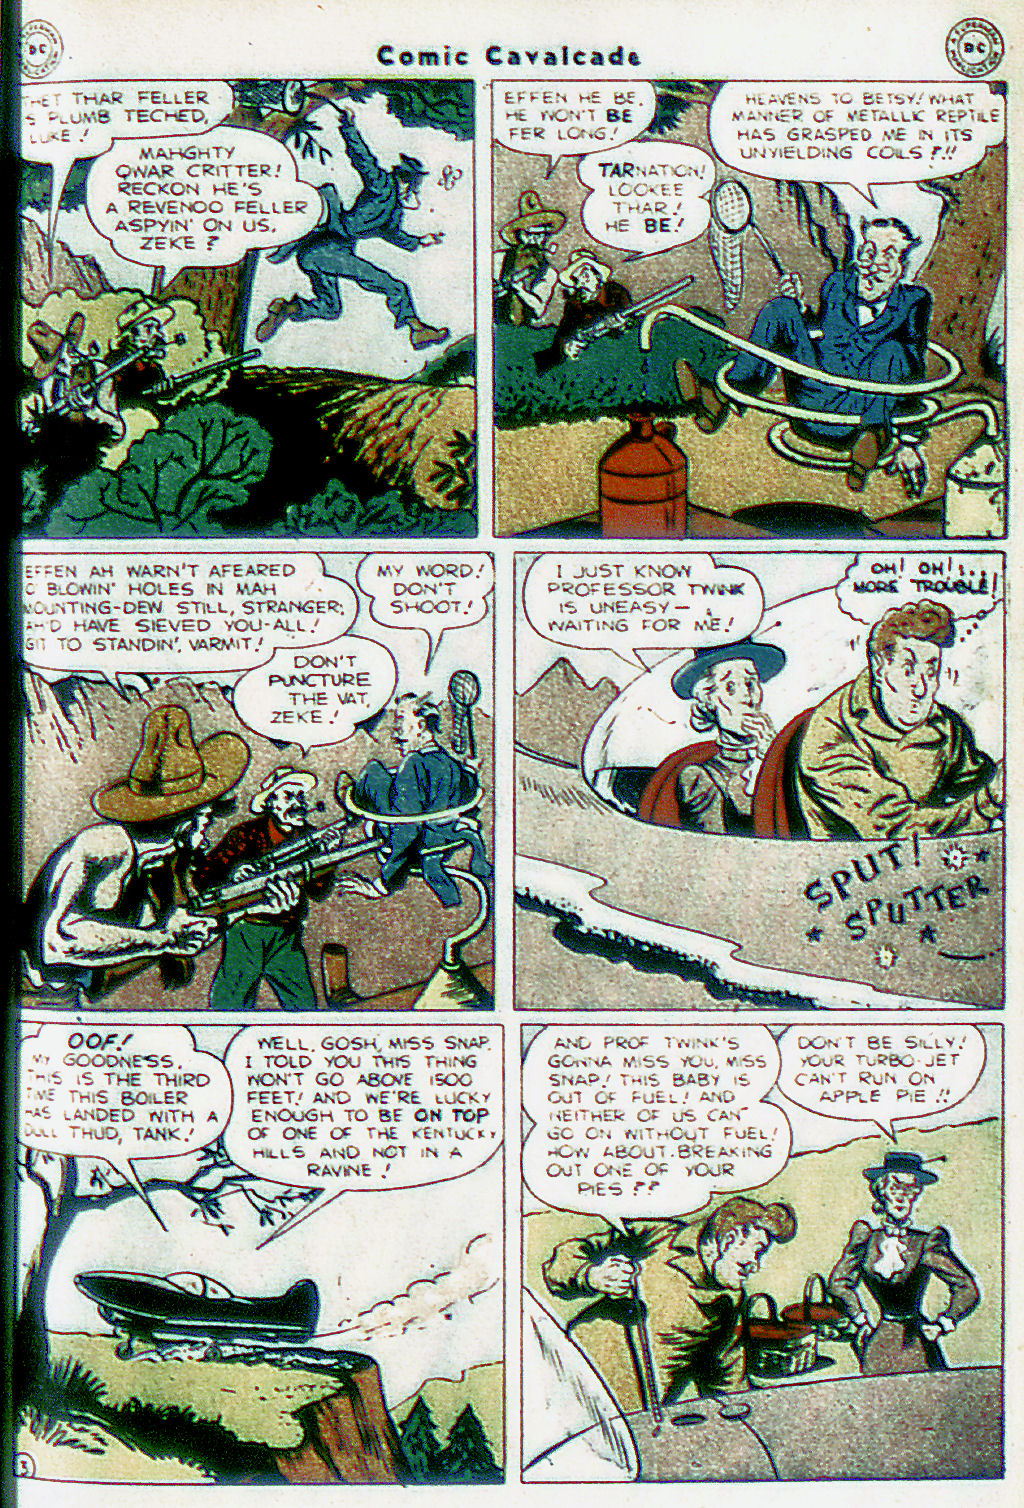 Comic Cavalcade issue 17 - Page 54